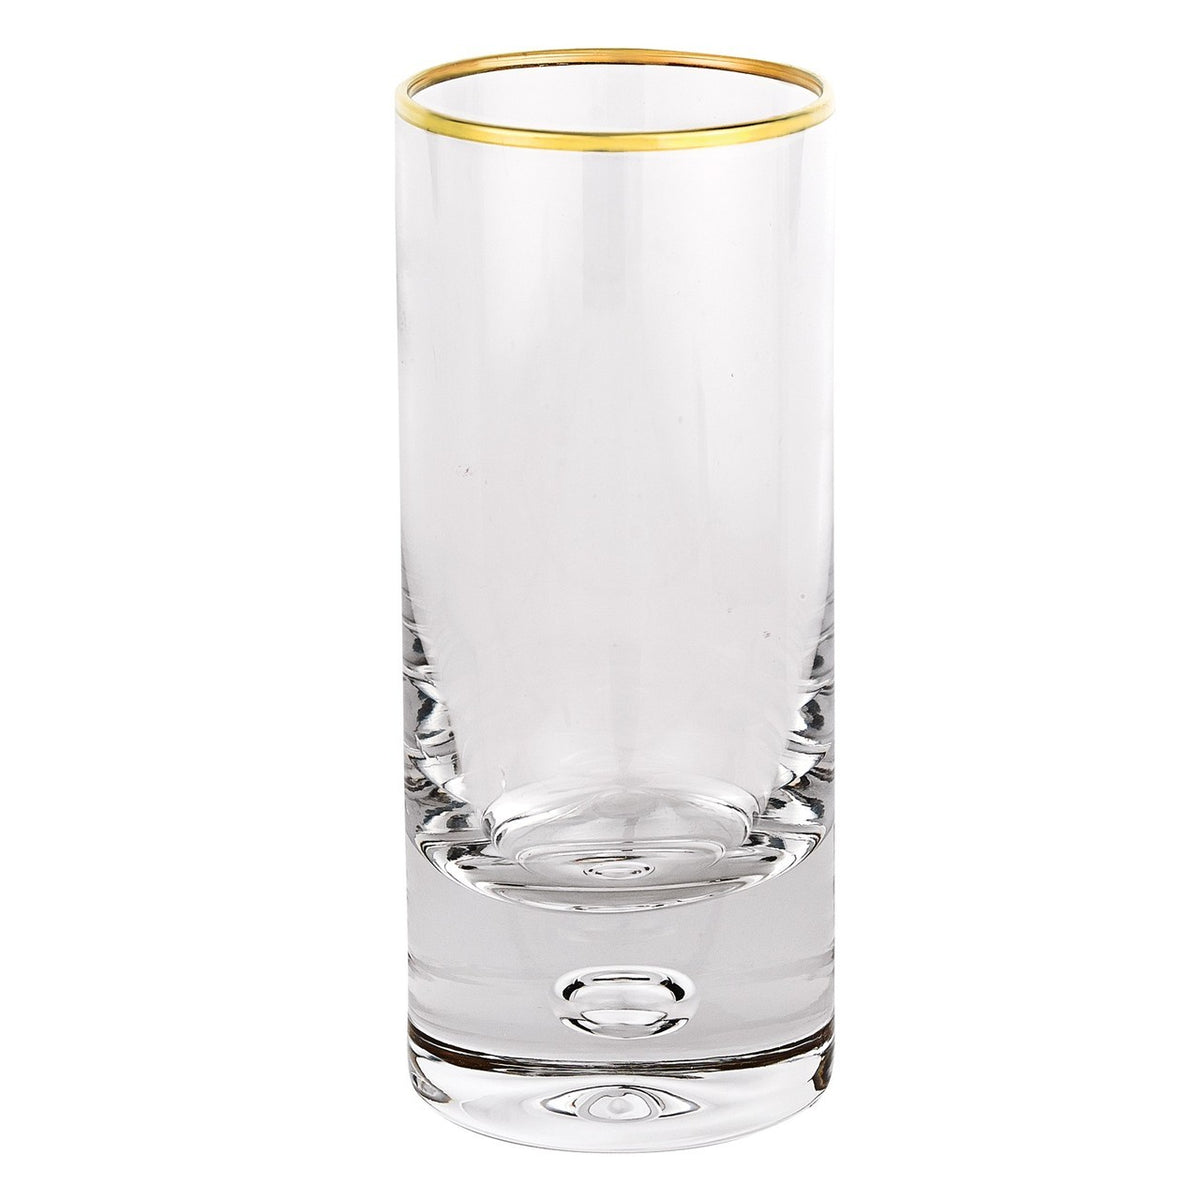 Galaxy Gold Crystal Vodka Glass Set